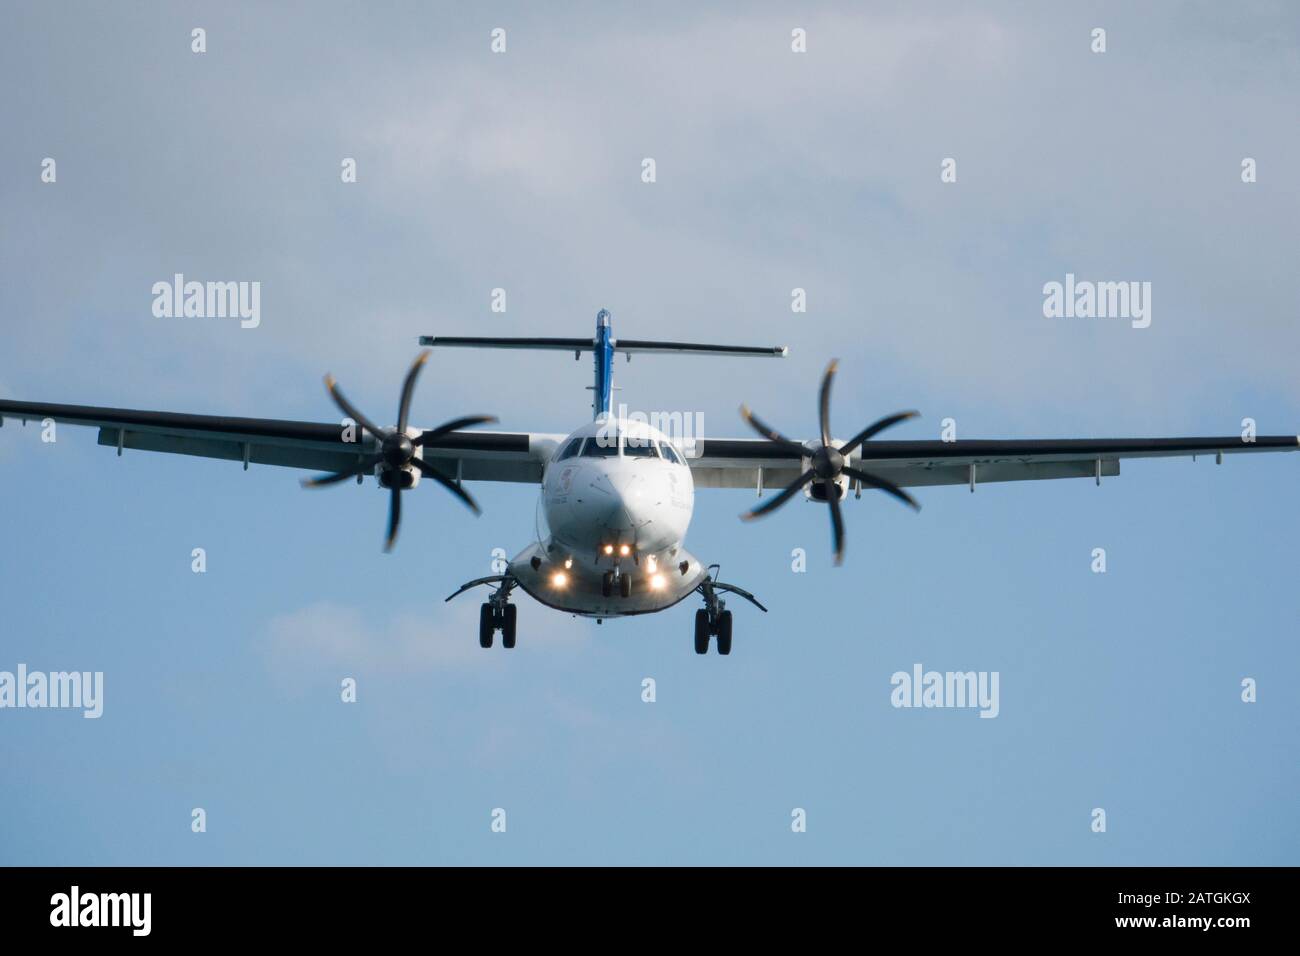 Air New Zealand turbo-prop plane landing at Wellington airport, New Zealand Stock Photo